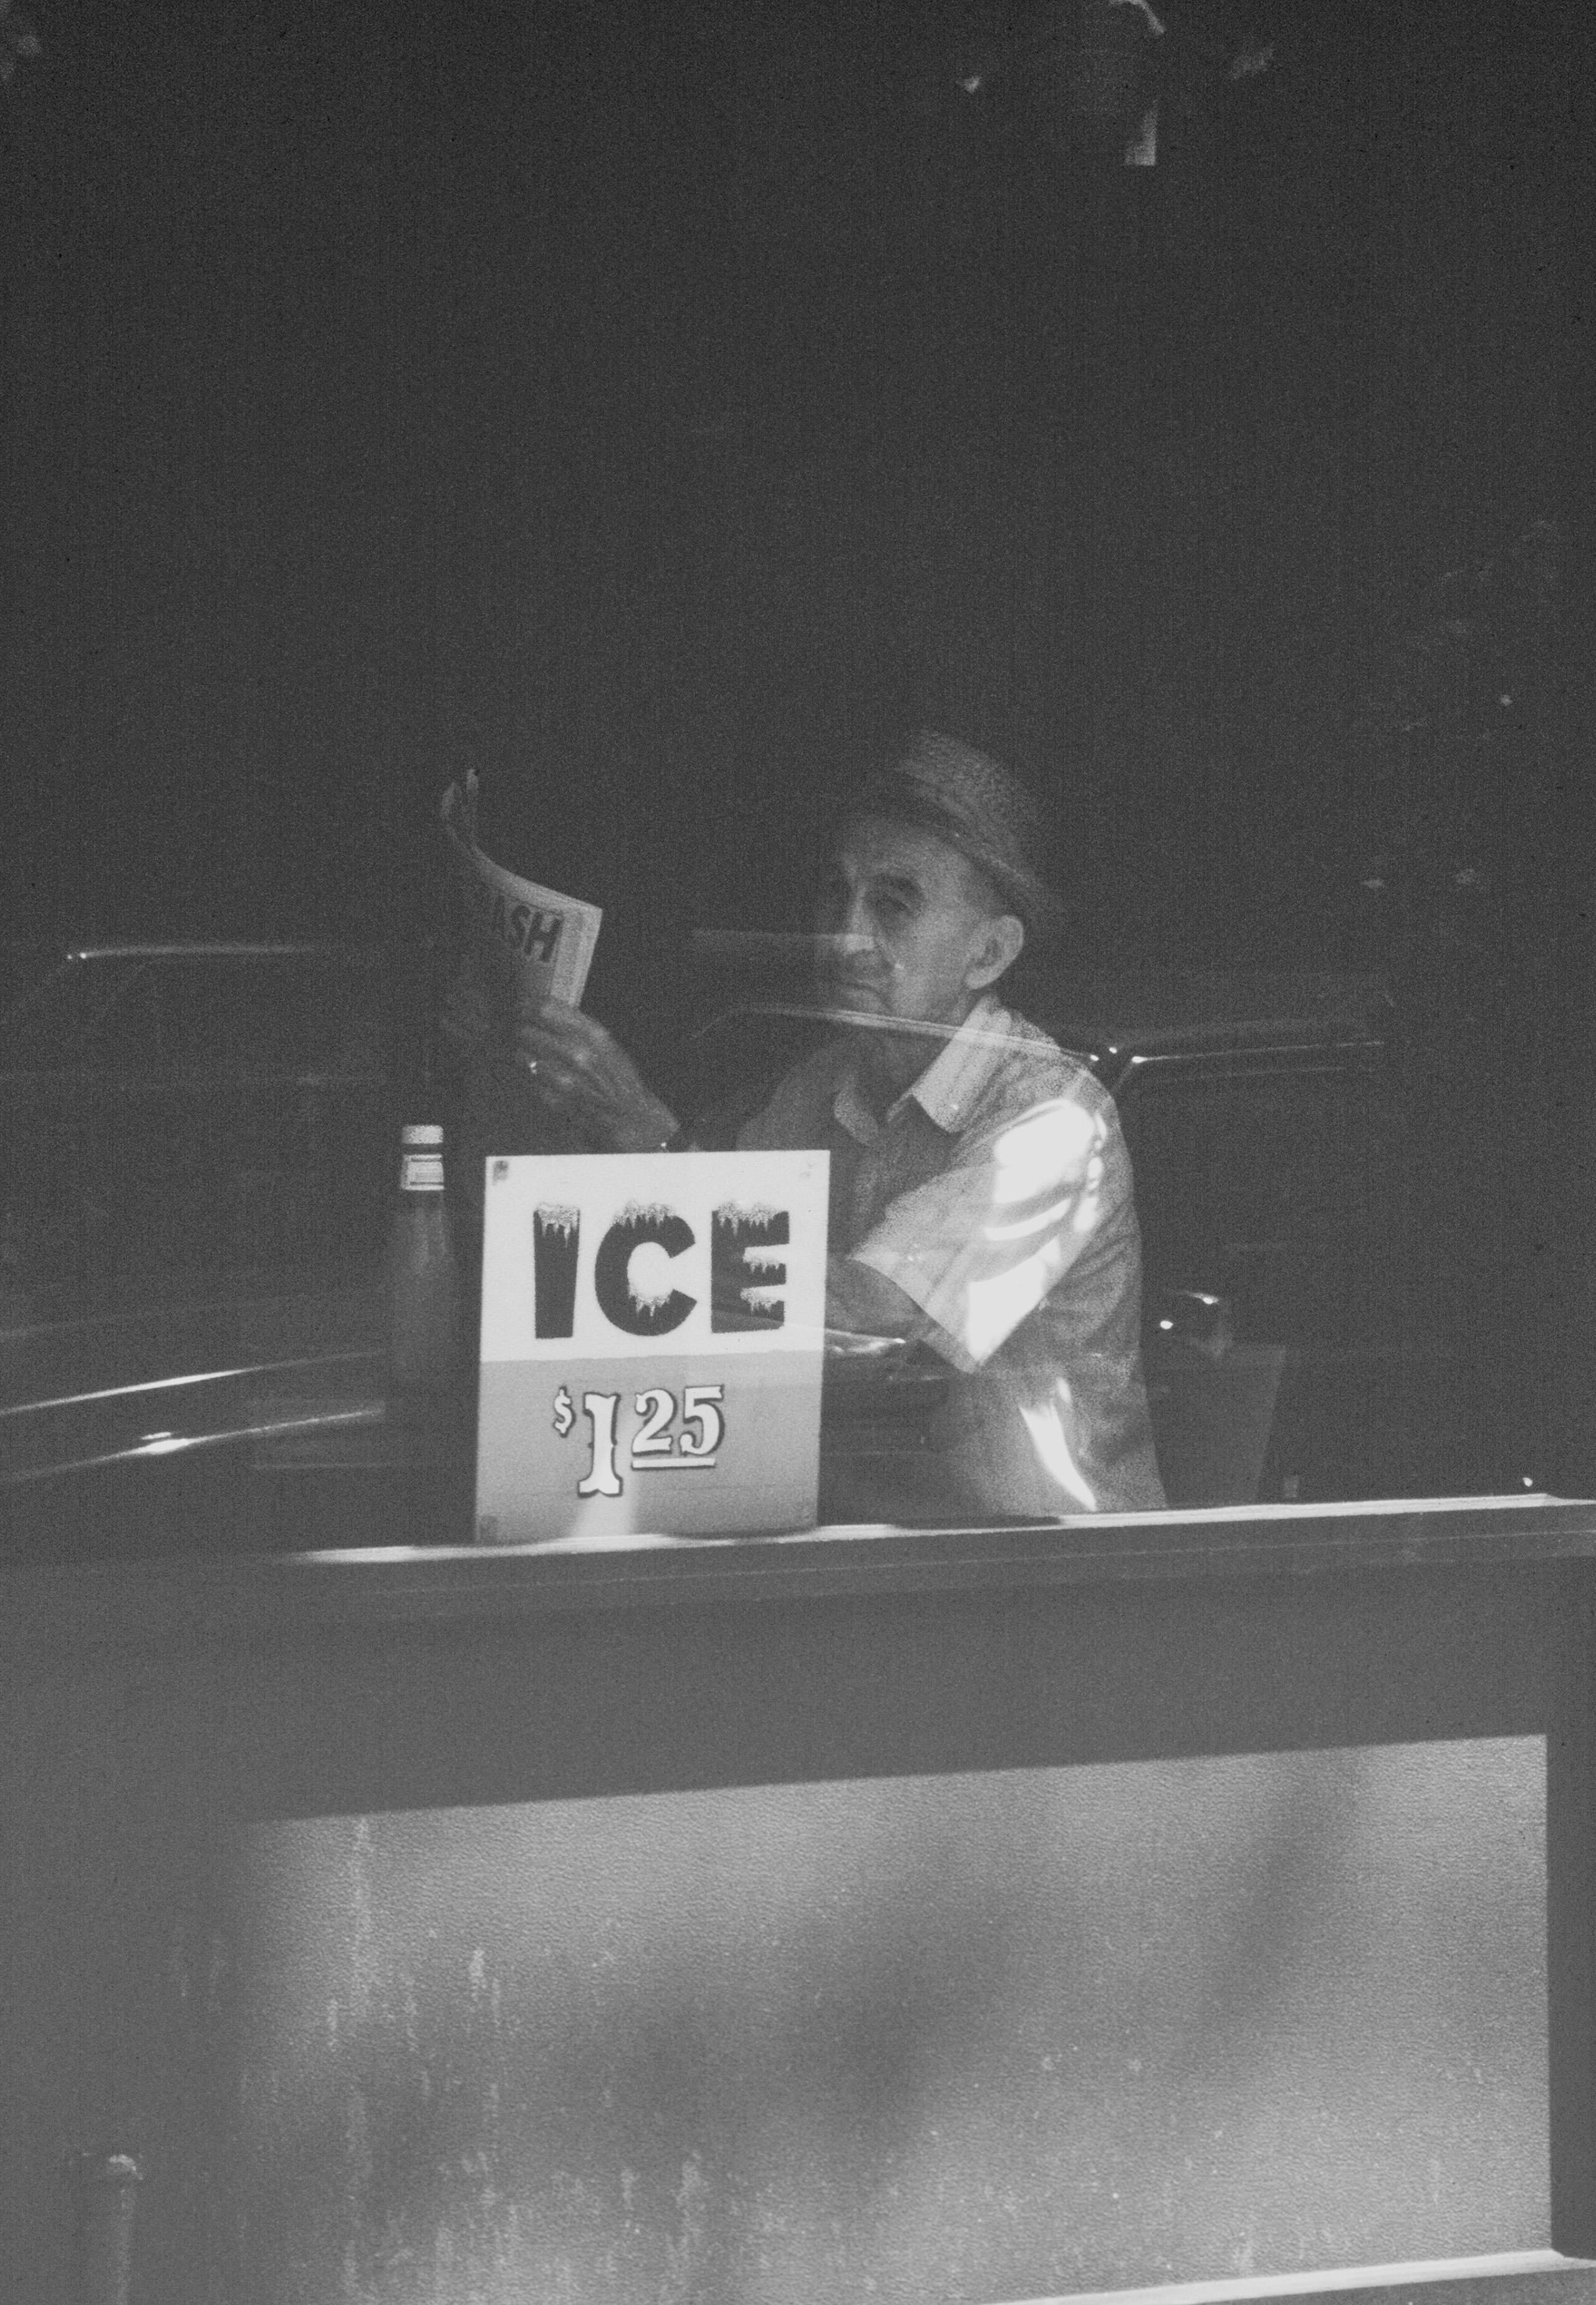 Ice, $1.25. Фотограф Роберт Фарбер